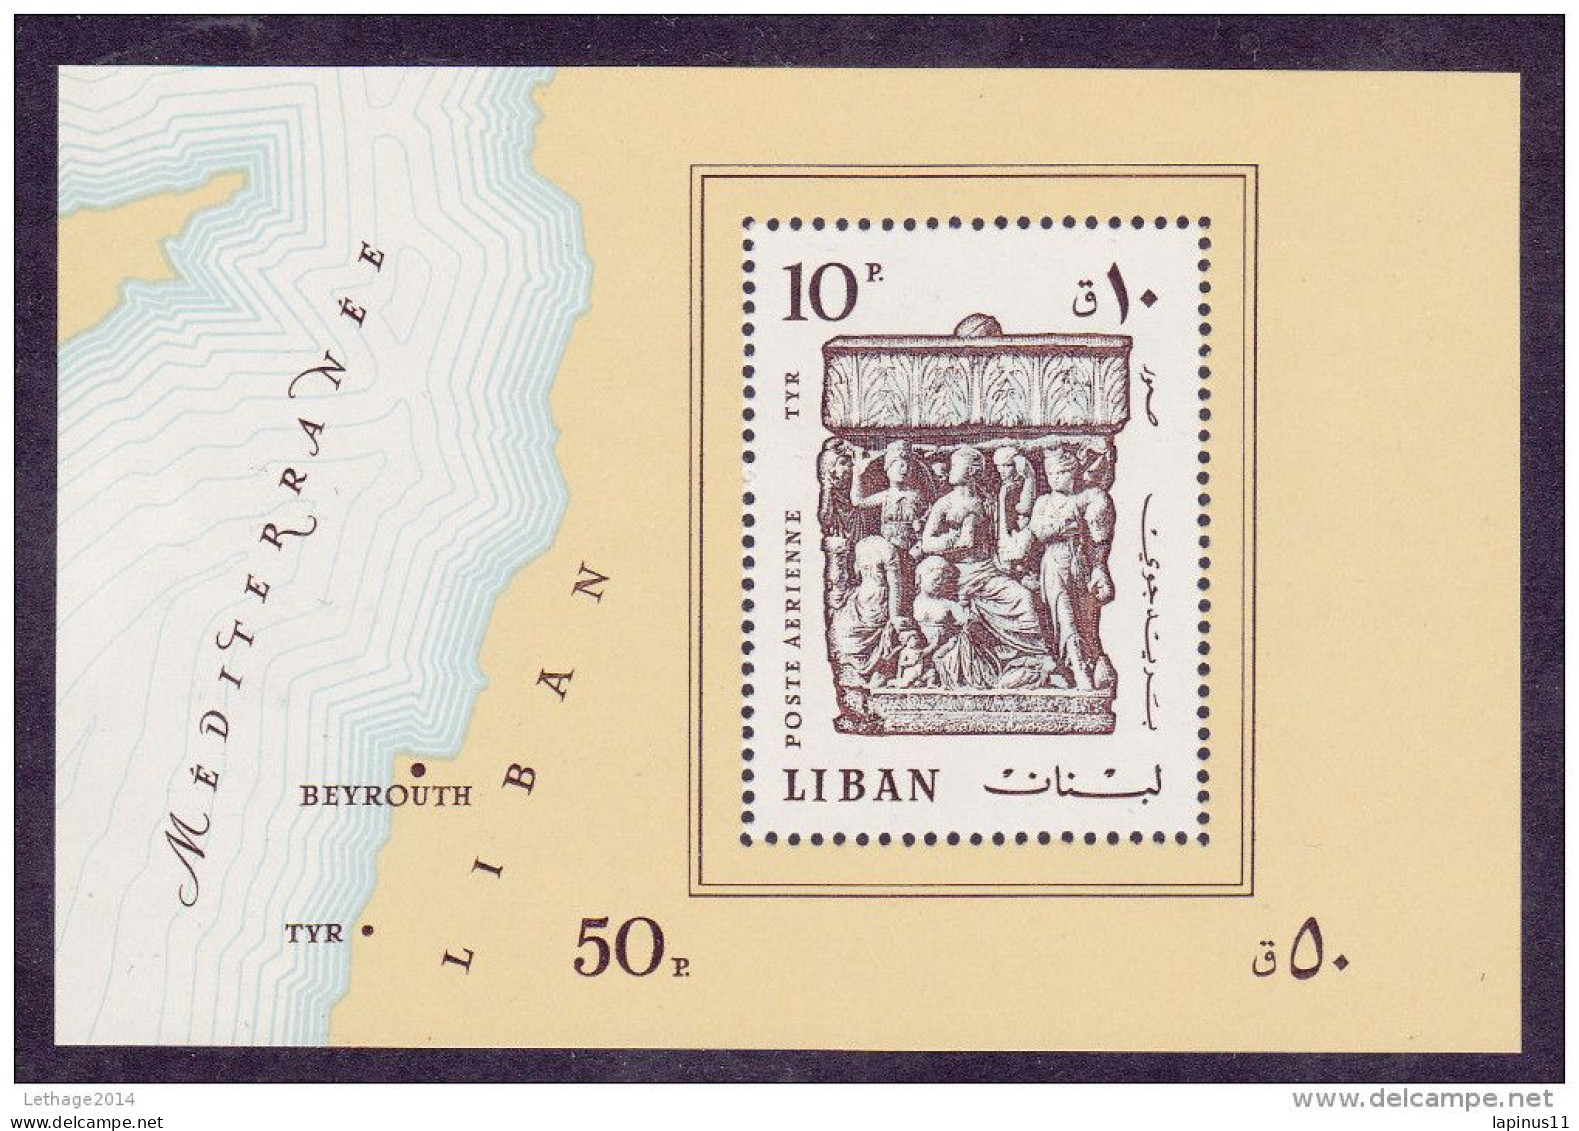 LEBANON LIBAN 1968 MNH OG Tyros Sheet Perf 10 3/4 X 11 3/4 Mi #37a - Lebanon